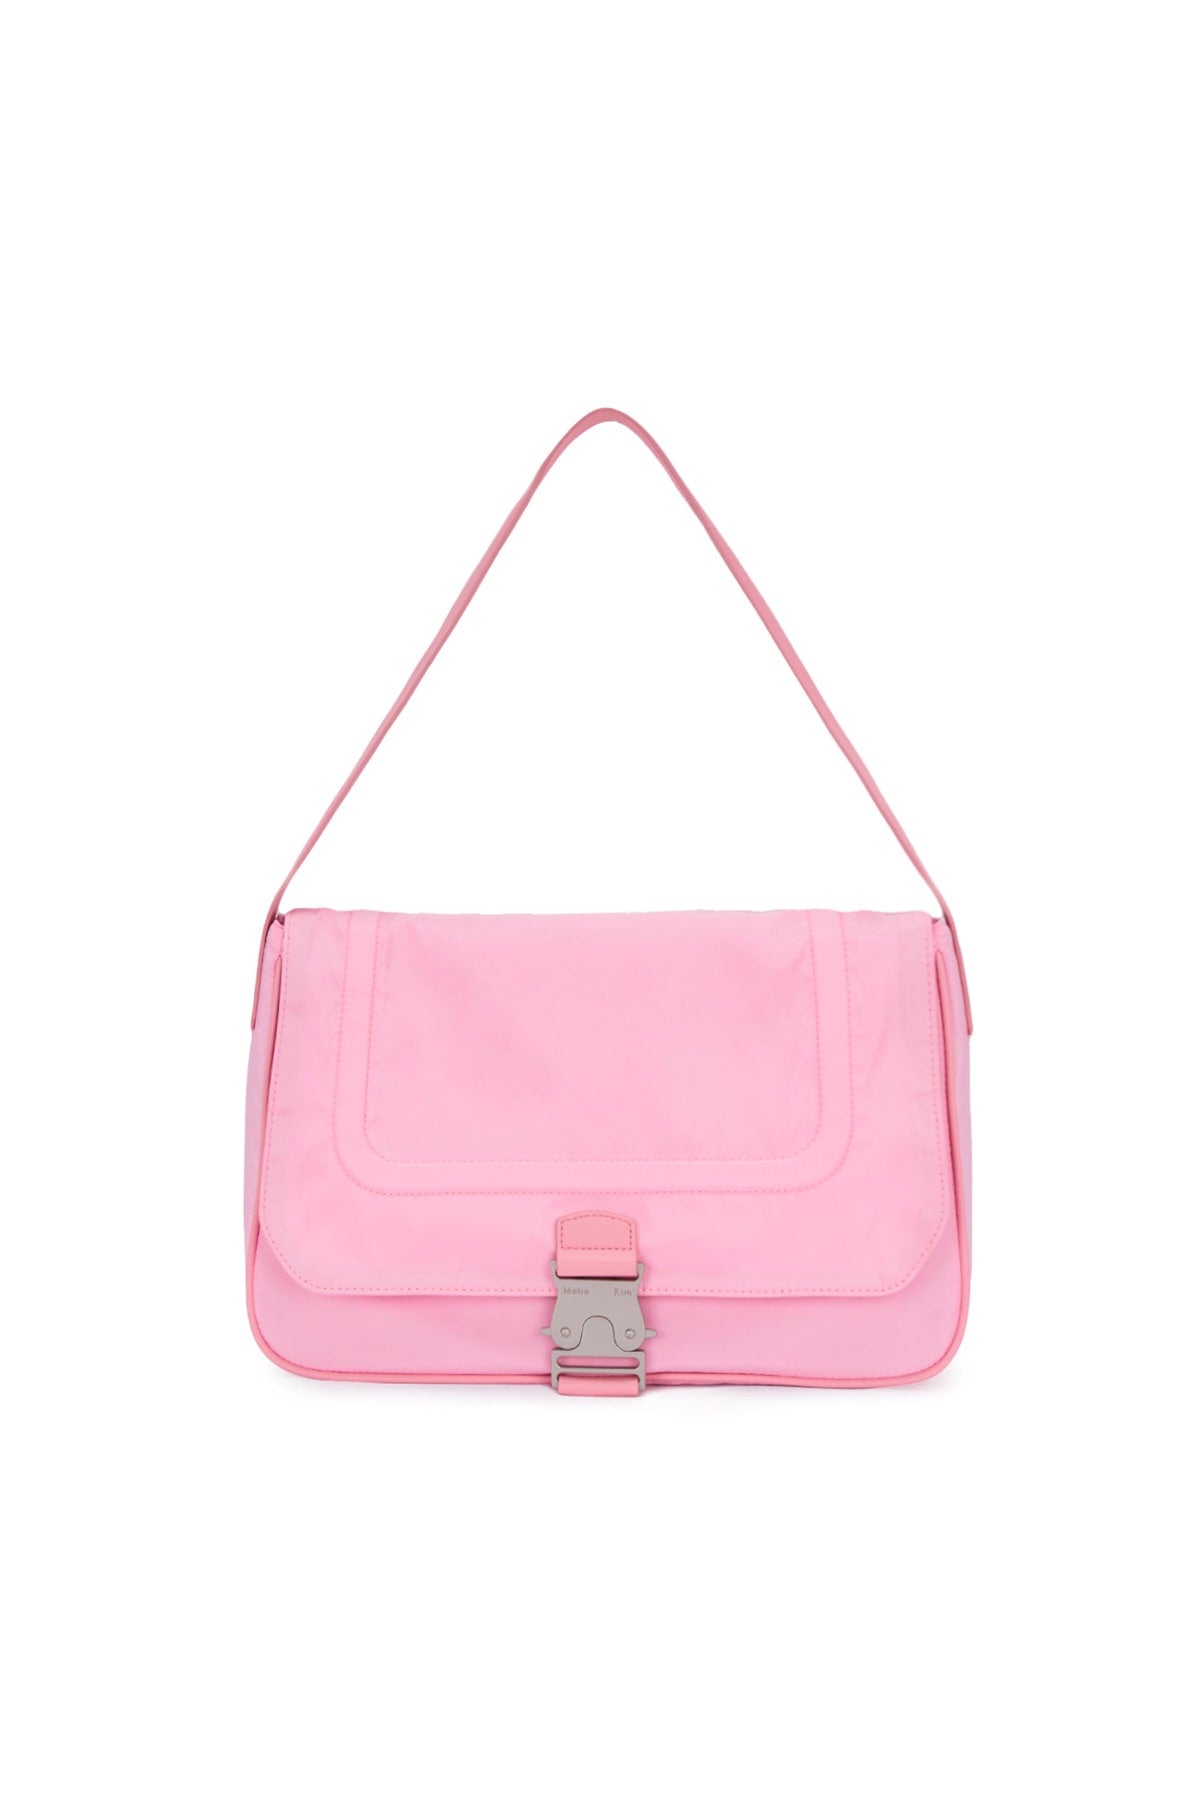 Buckle Bag in Pink